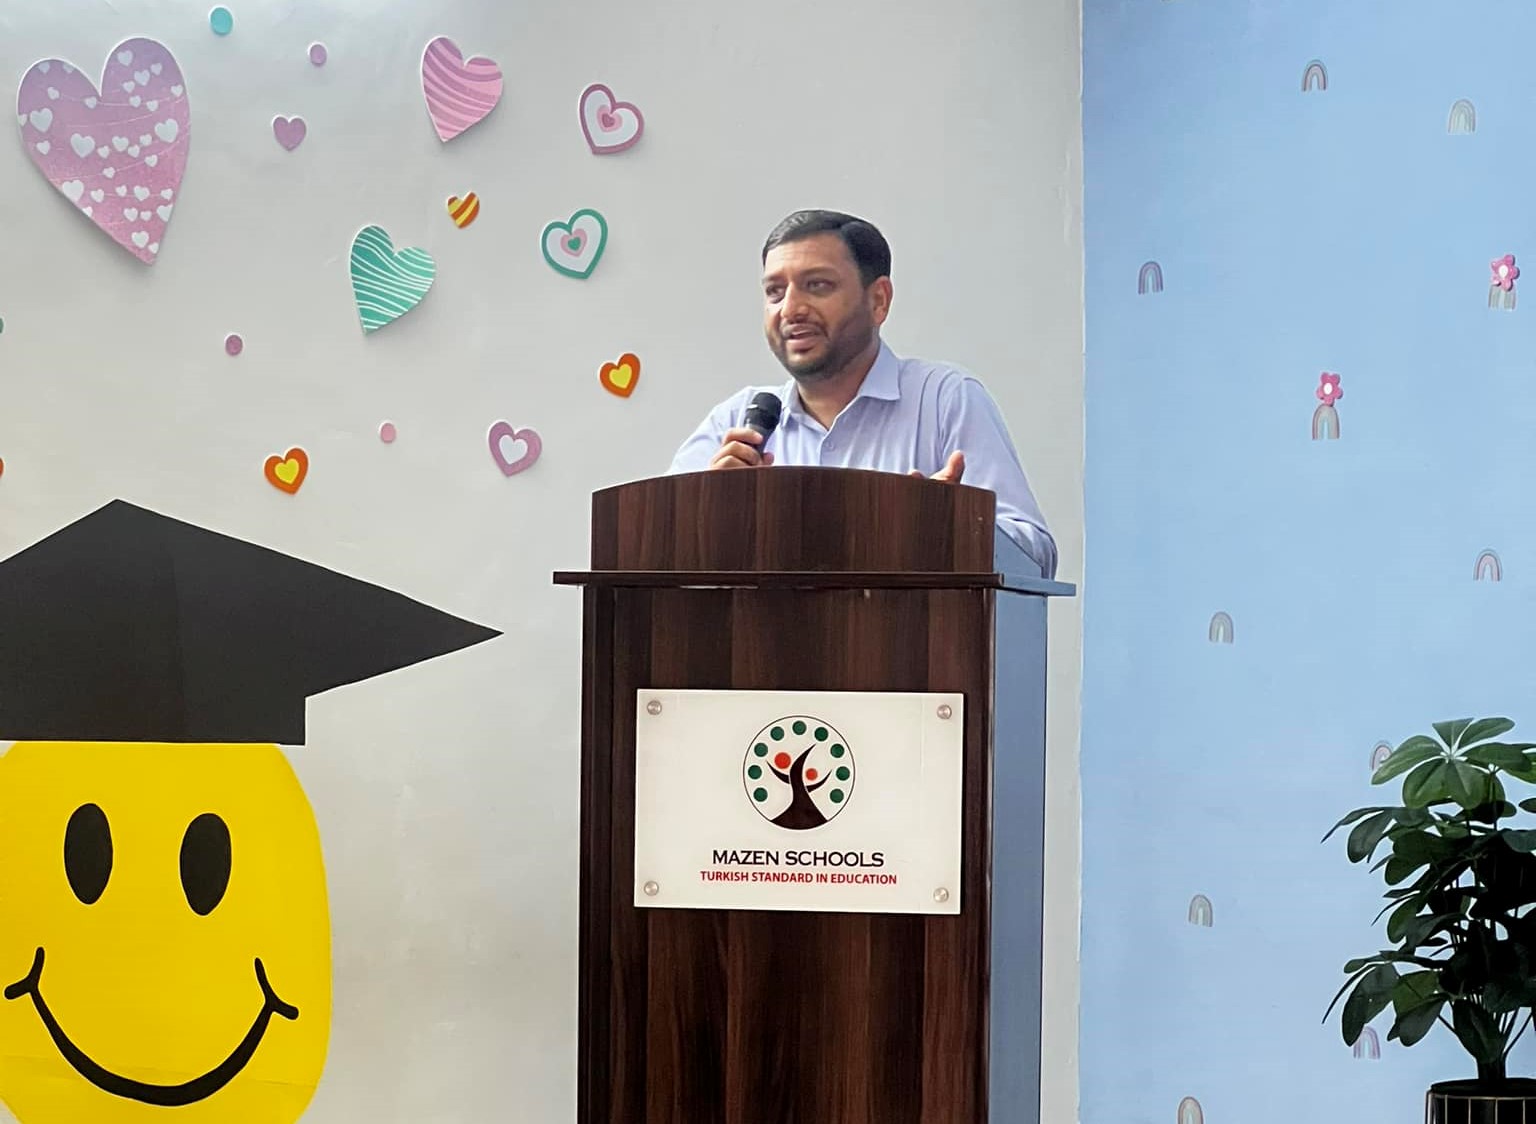 Abdul Qudoos Piracha, Director of Mazen Schools